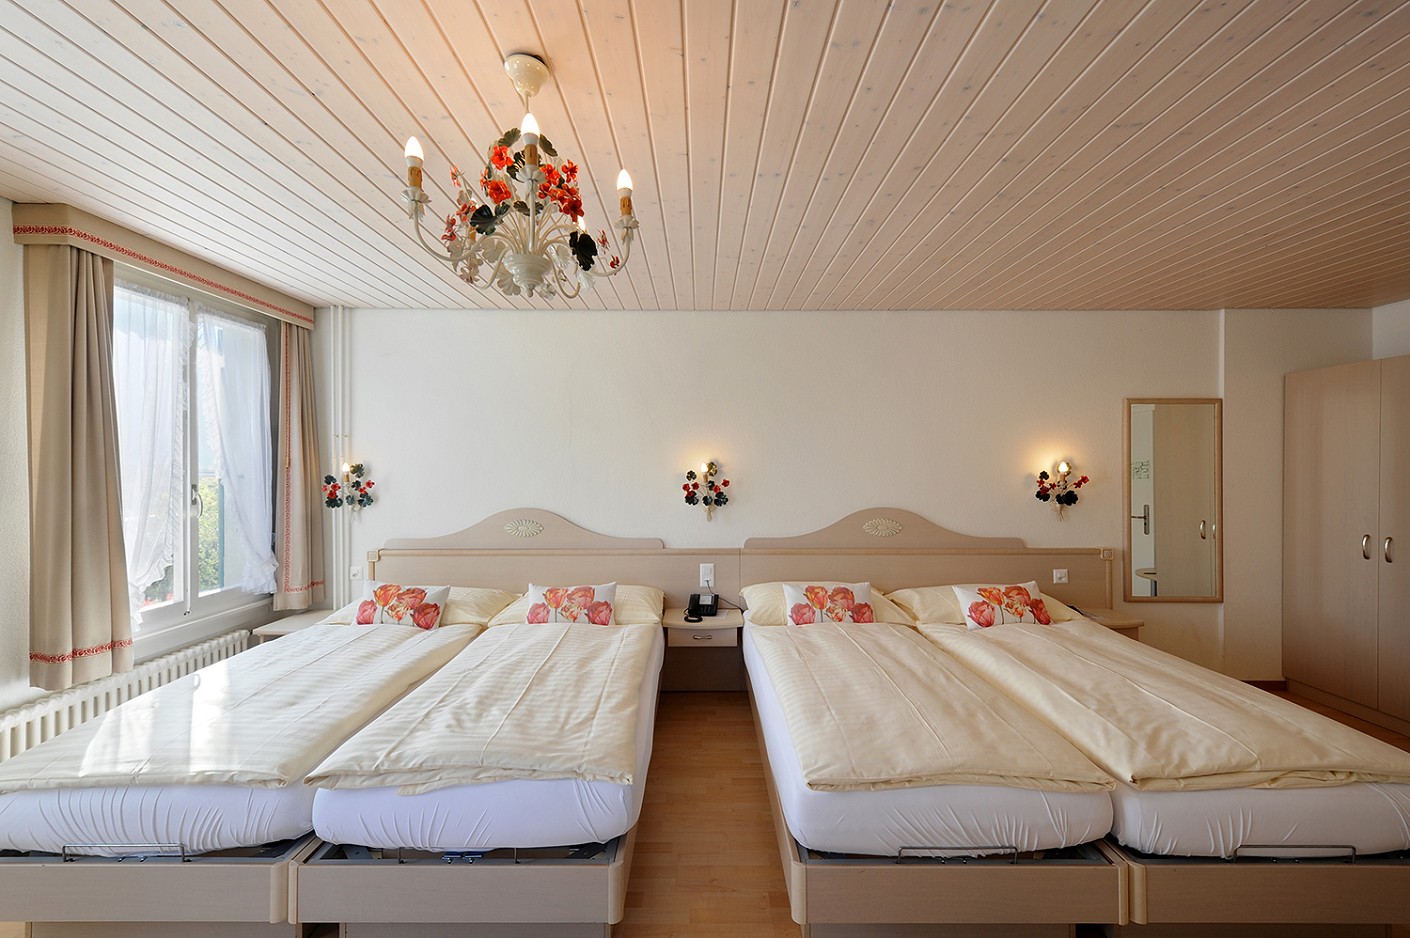 Four bed room Hotel Beausite Interlaken-Switzerland